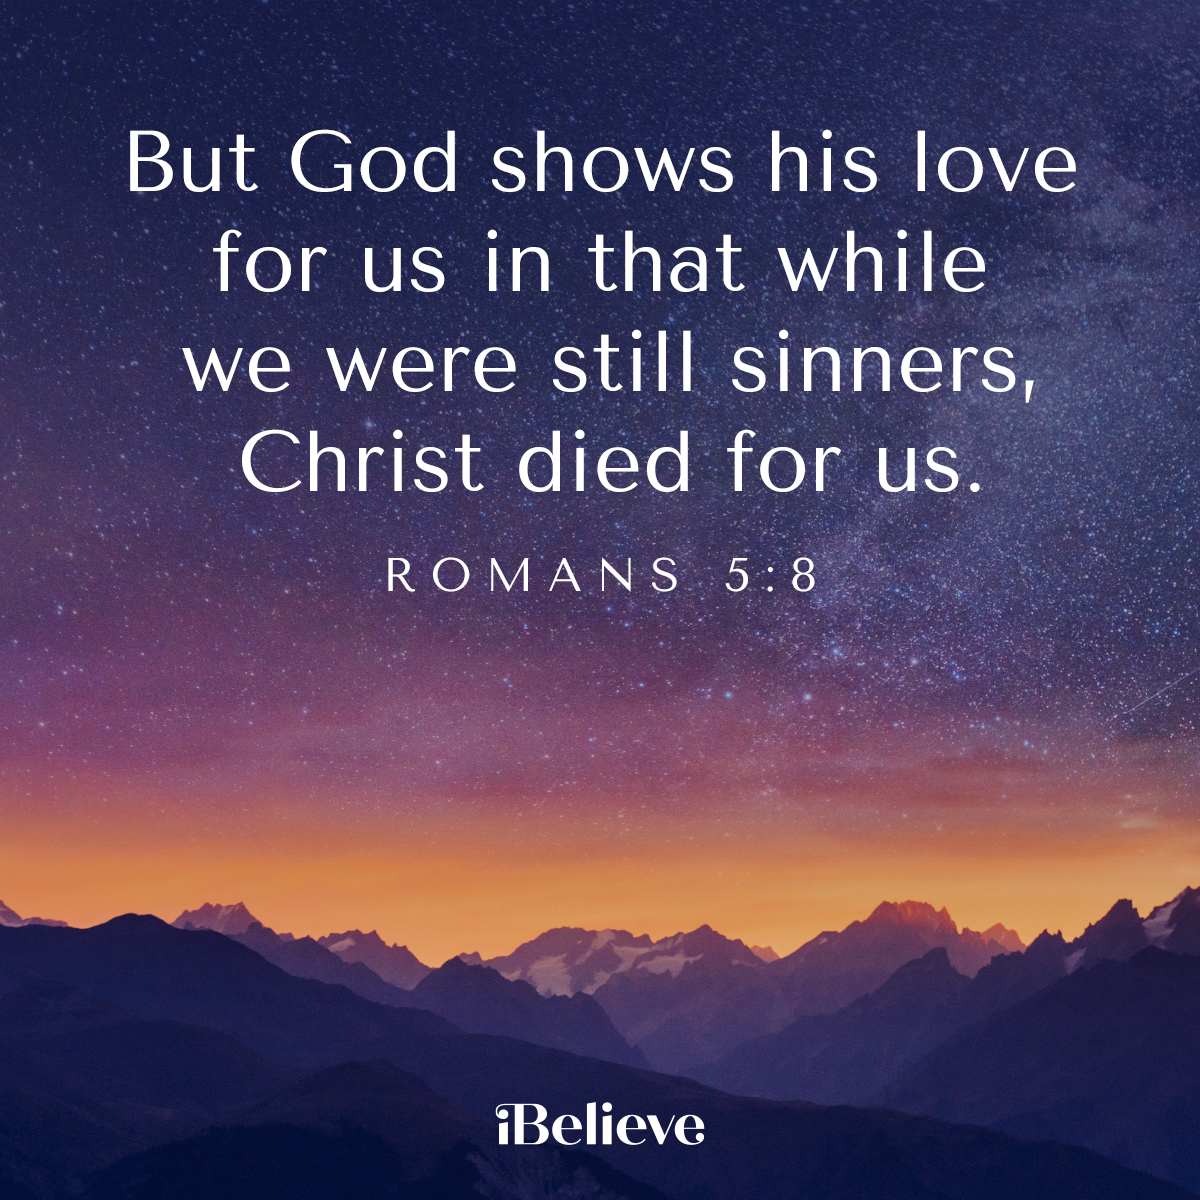 Romans 5:8, inspirational image